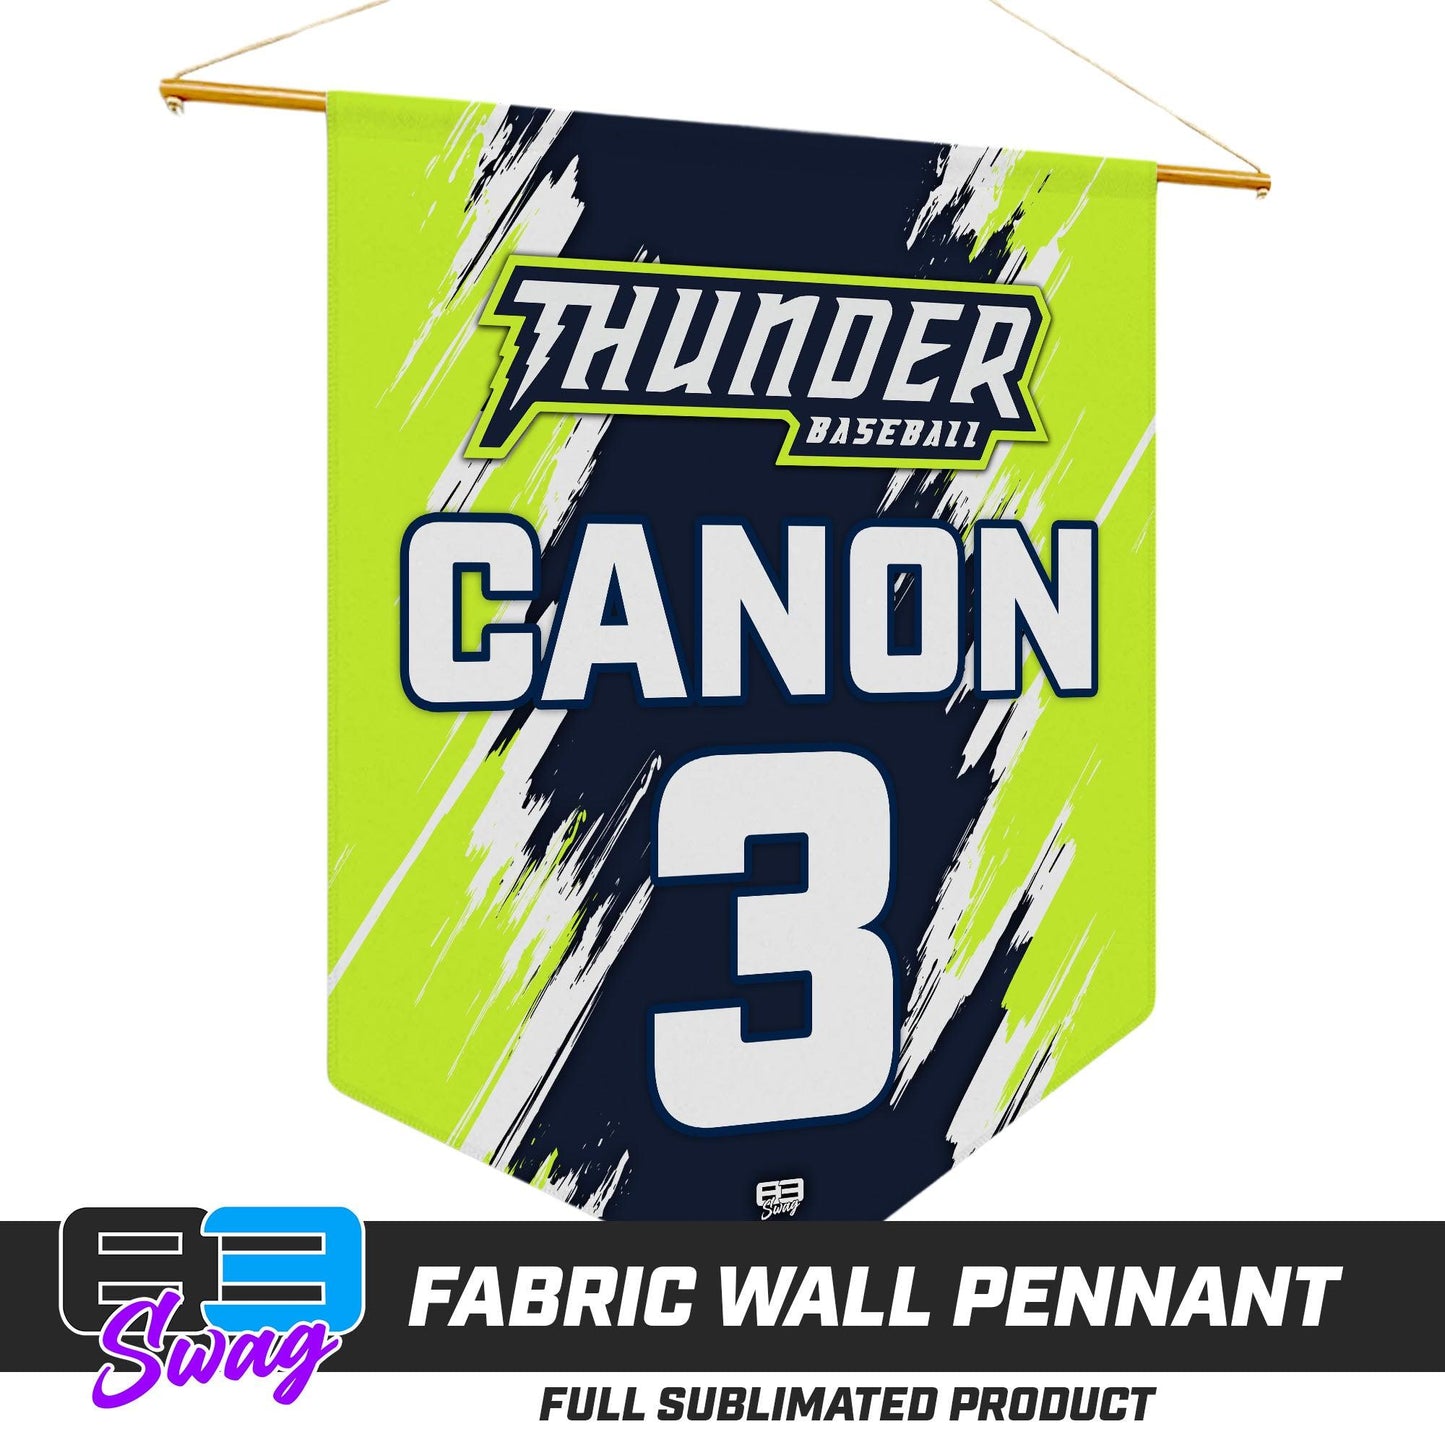 18"x21" Fabric Wall Pennant - Ponte Vedra Thunder Baseball - 83Swag